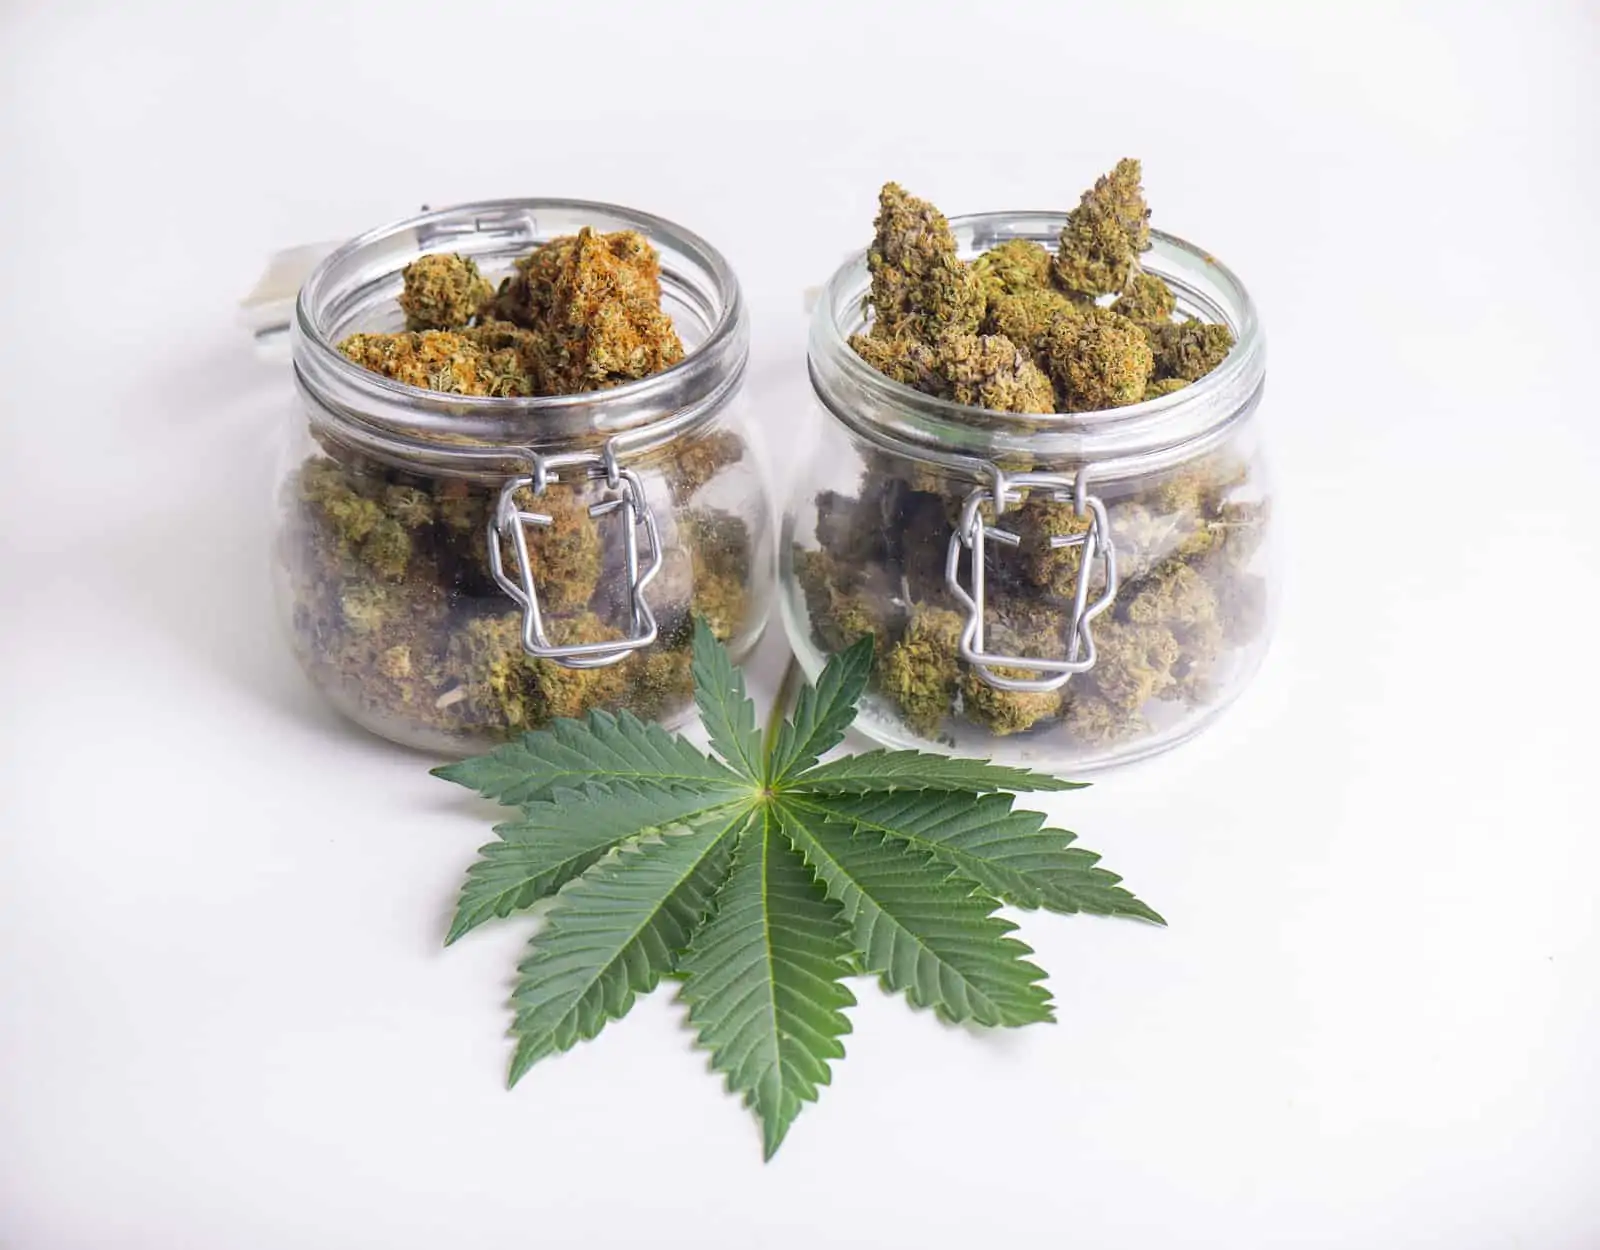 Curaleaf Marijuana Dispensaries Florida. 2 glass jars with marijuana buds and a marijuana leaf.